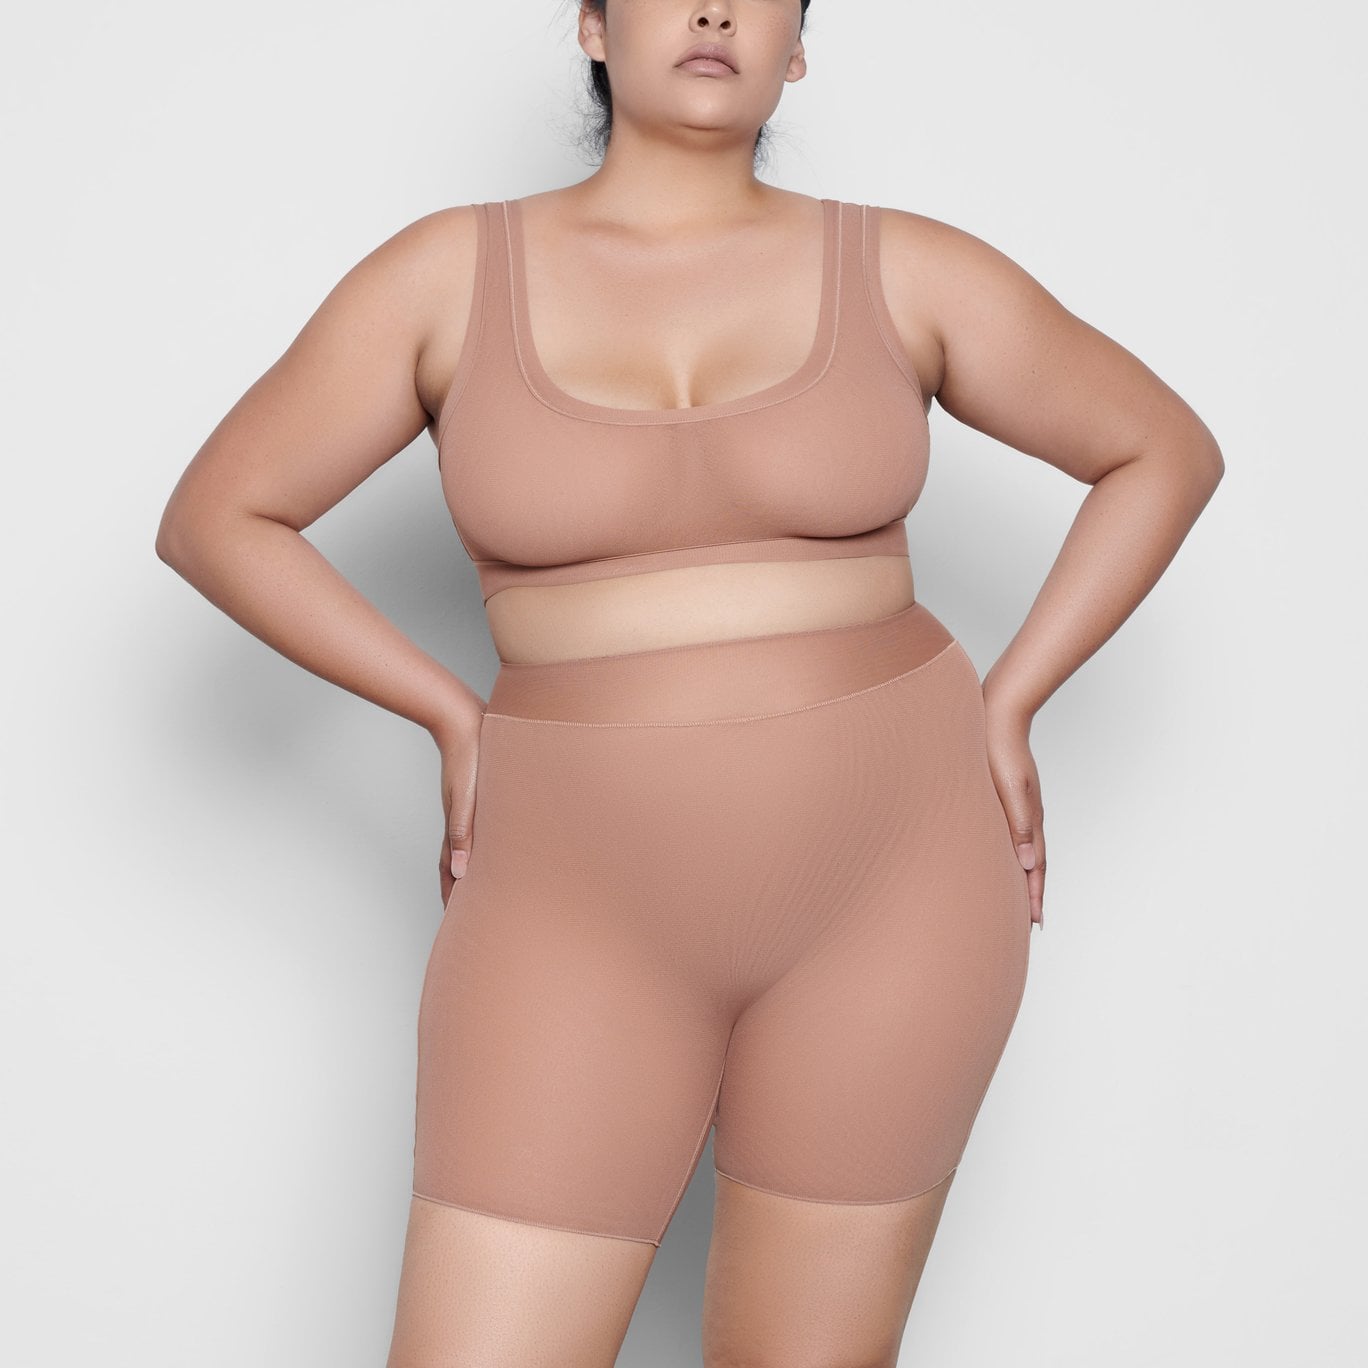 Review: I Tried Kim Kardashian's SKIMS Summer Mesh Collection